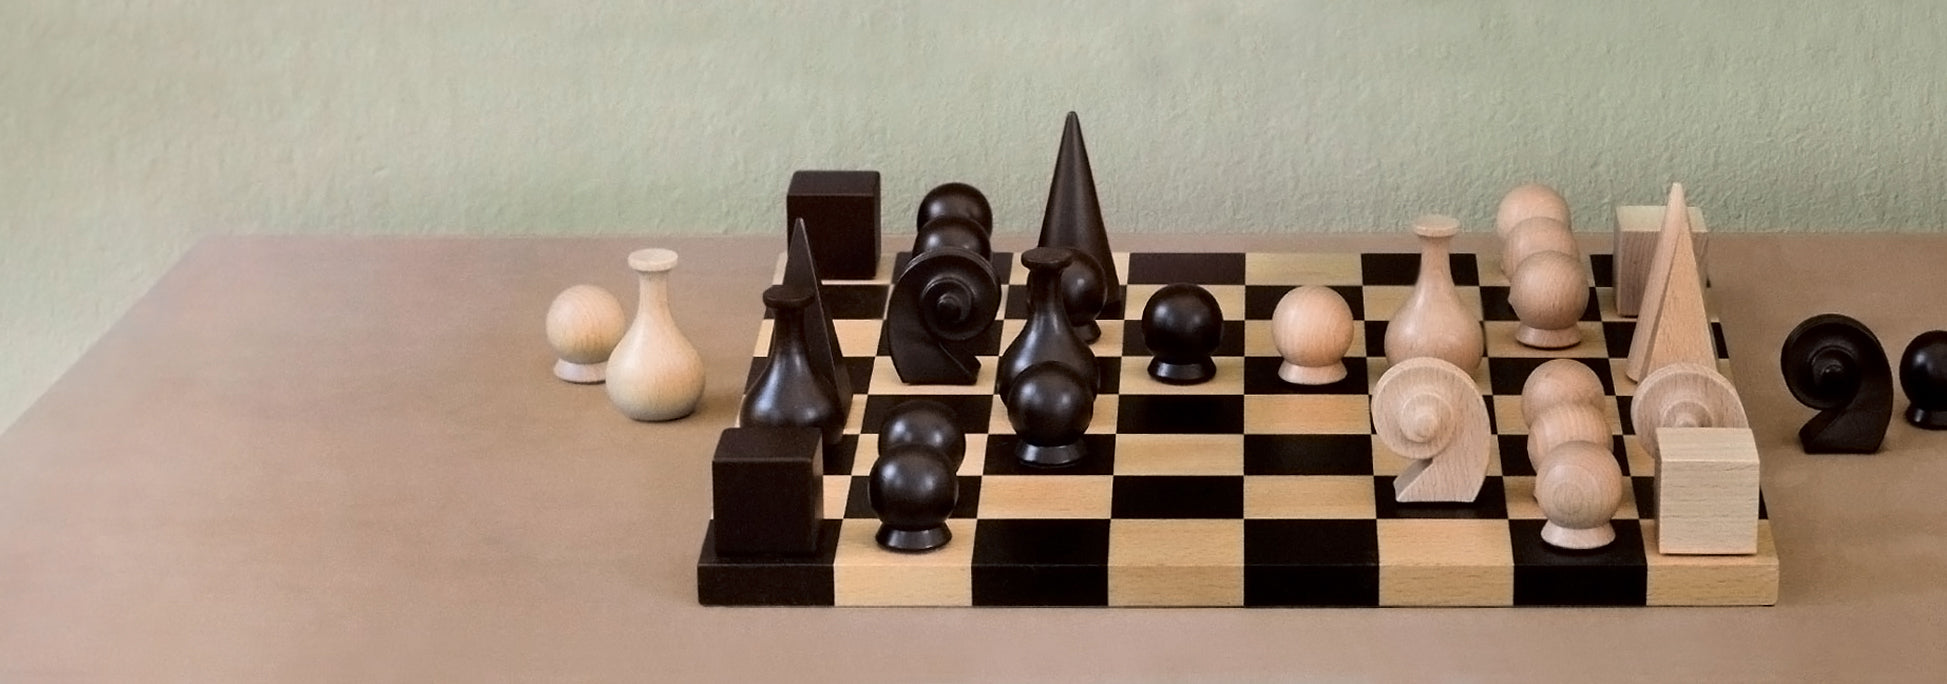 Man Ray, Man Ray Chess, Chess Set,